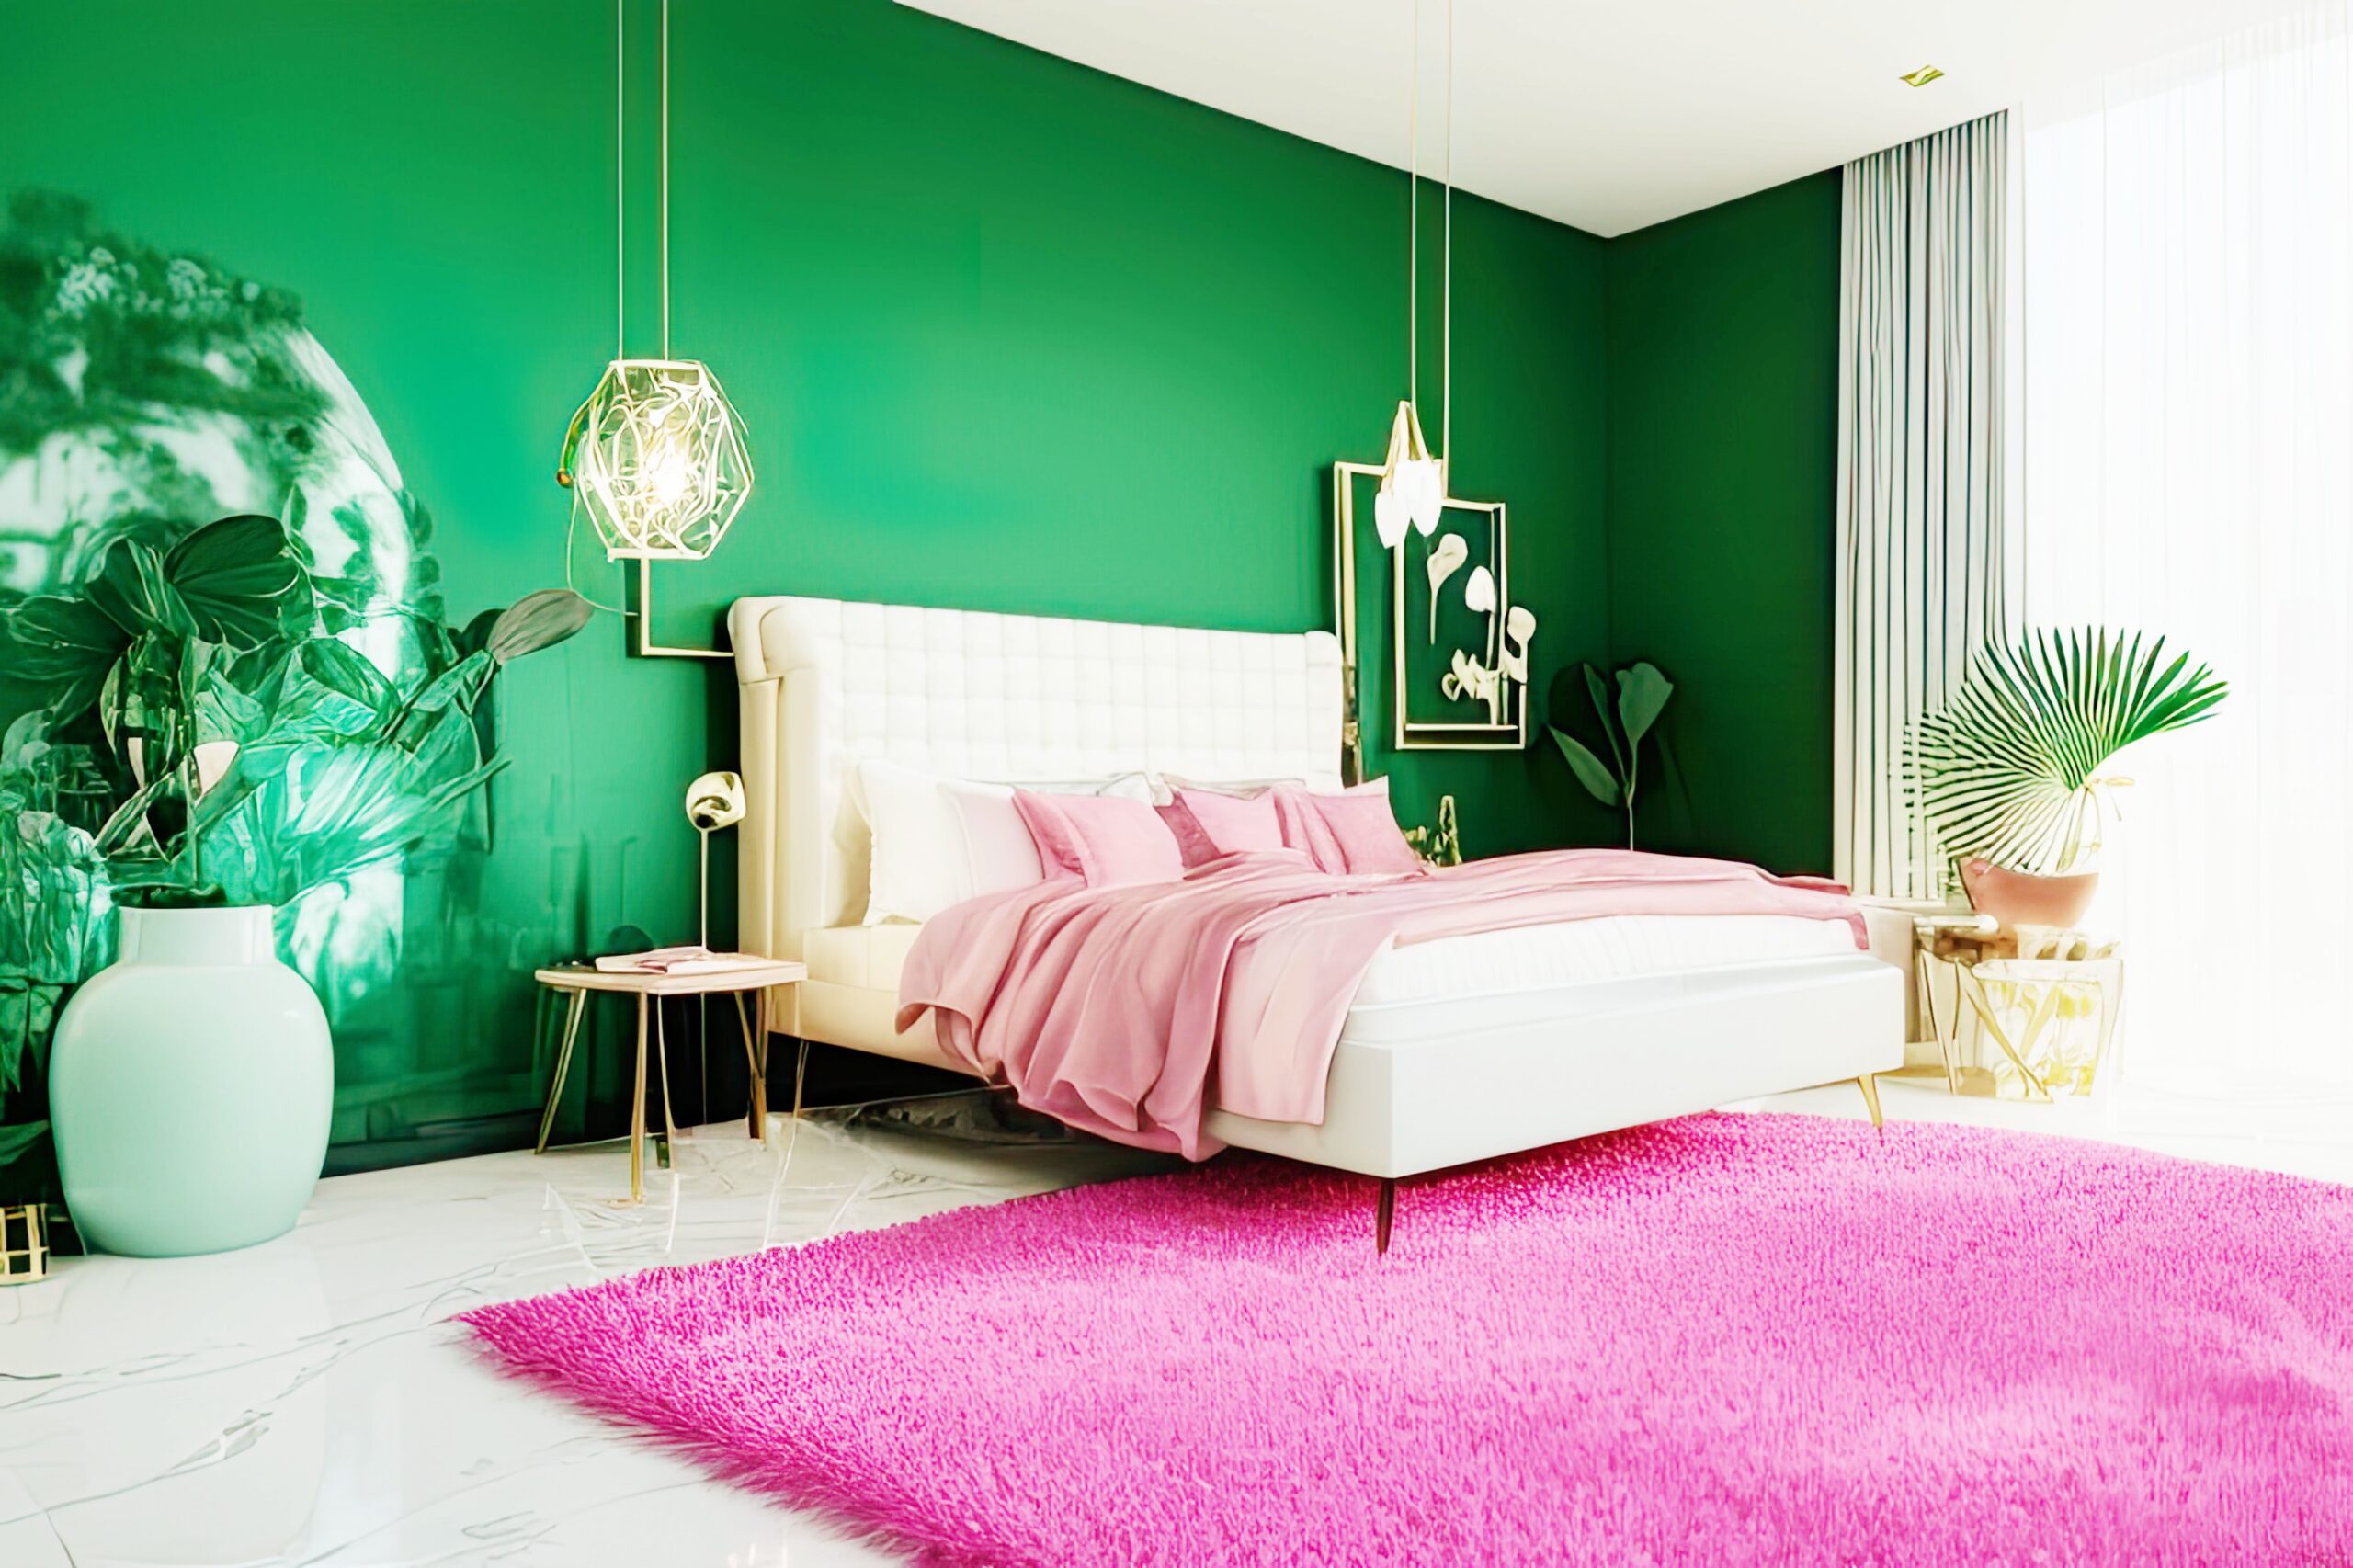 <img src="green.jpg" alt="green and pink bedroom"/> 